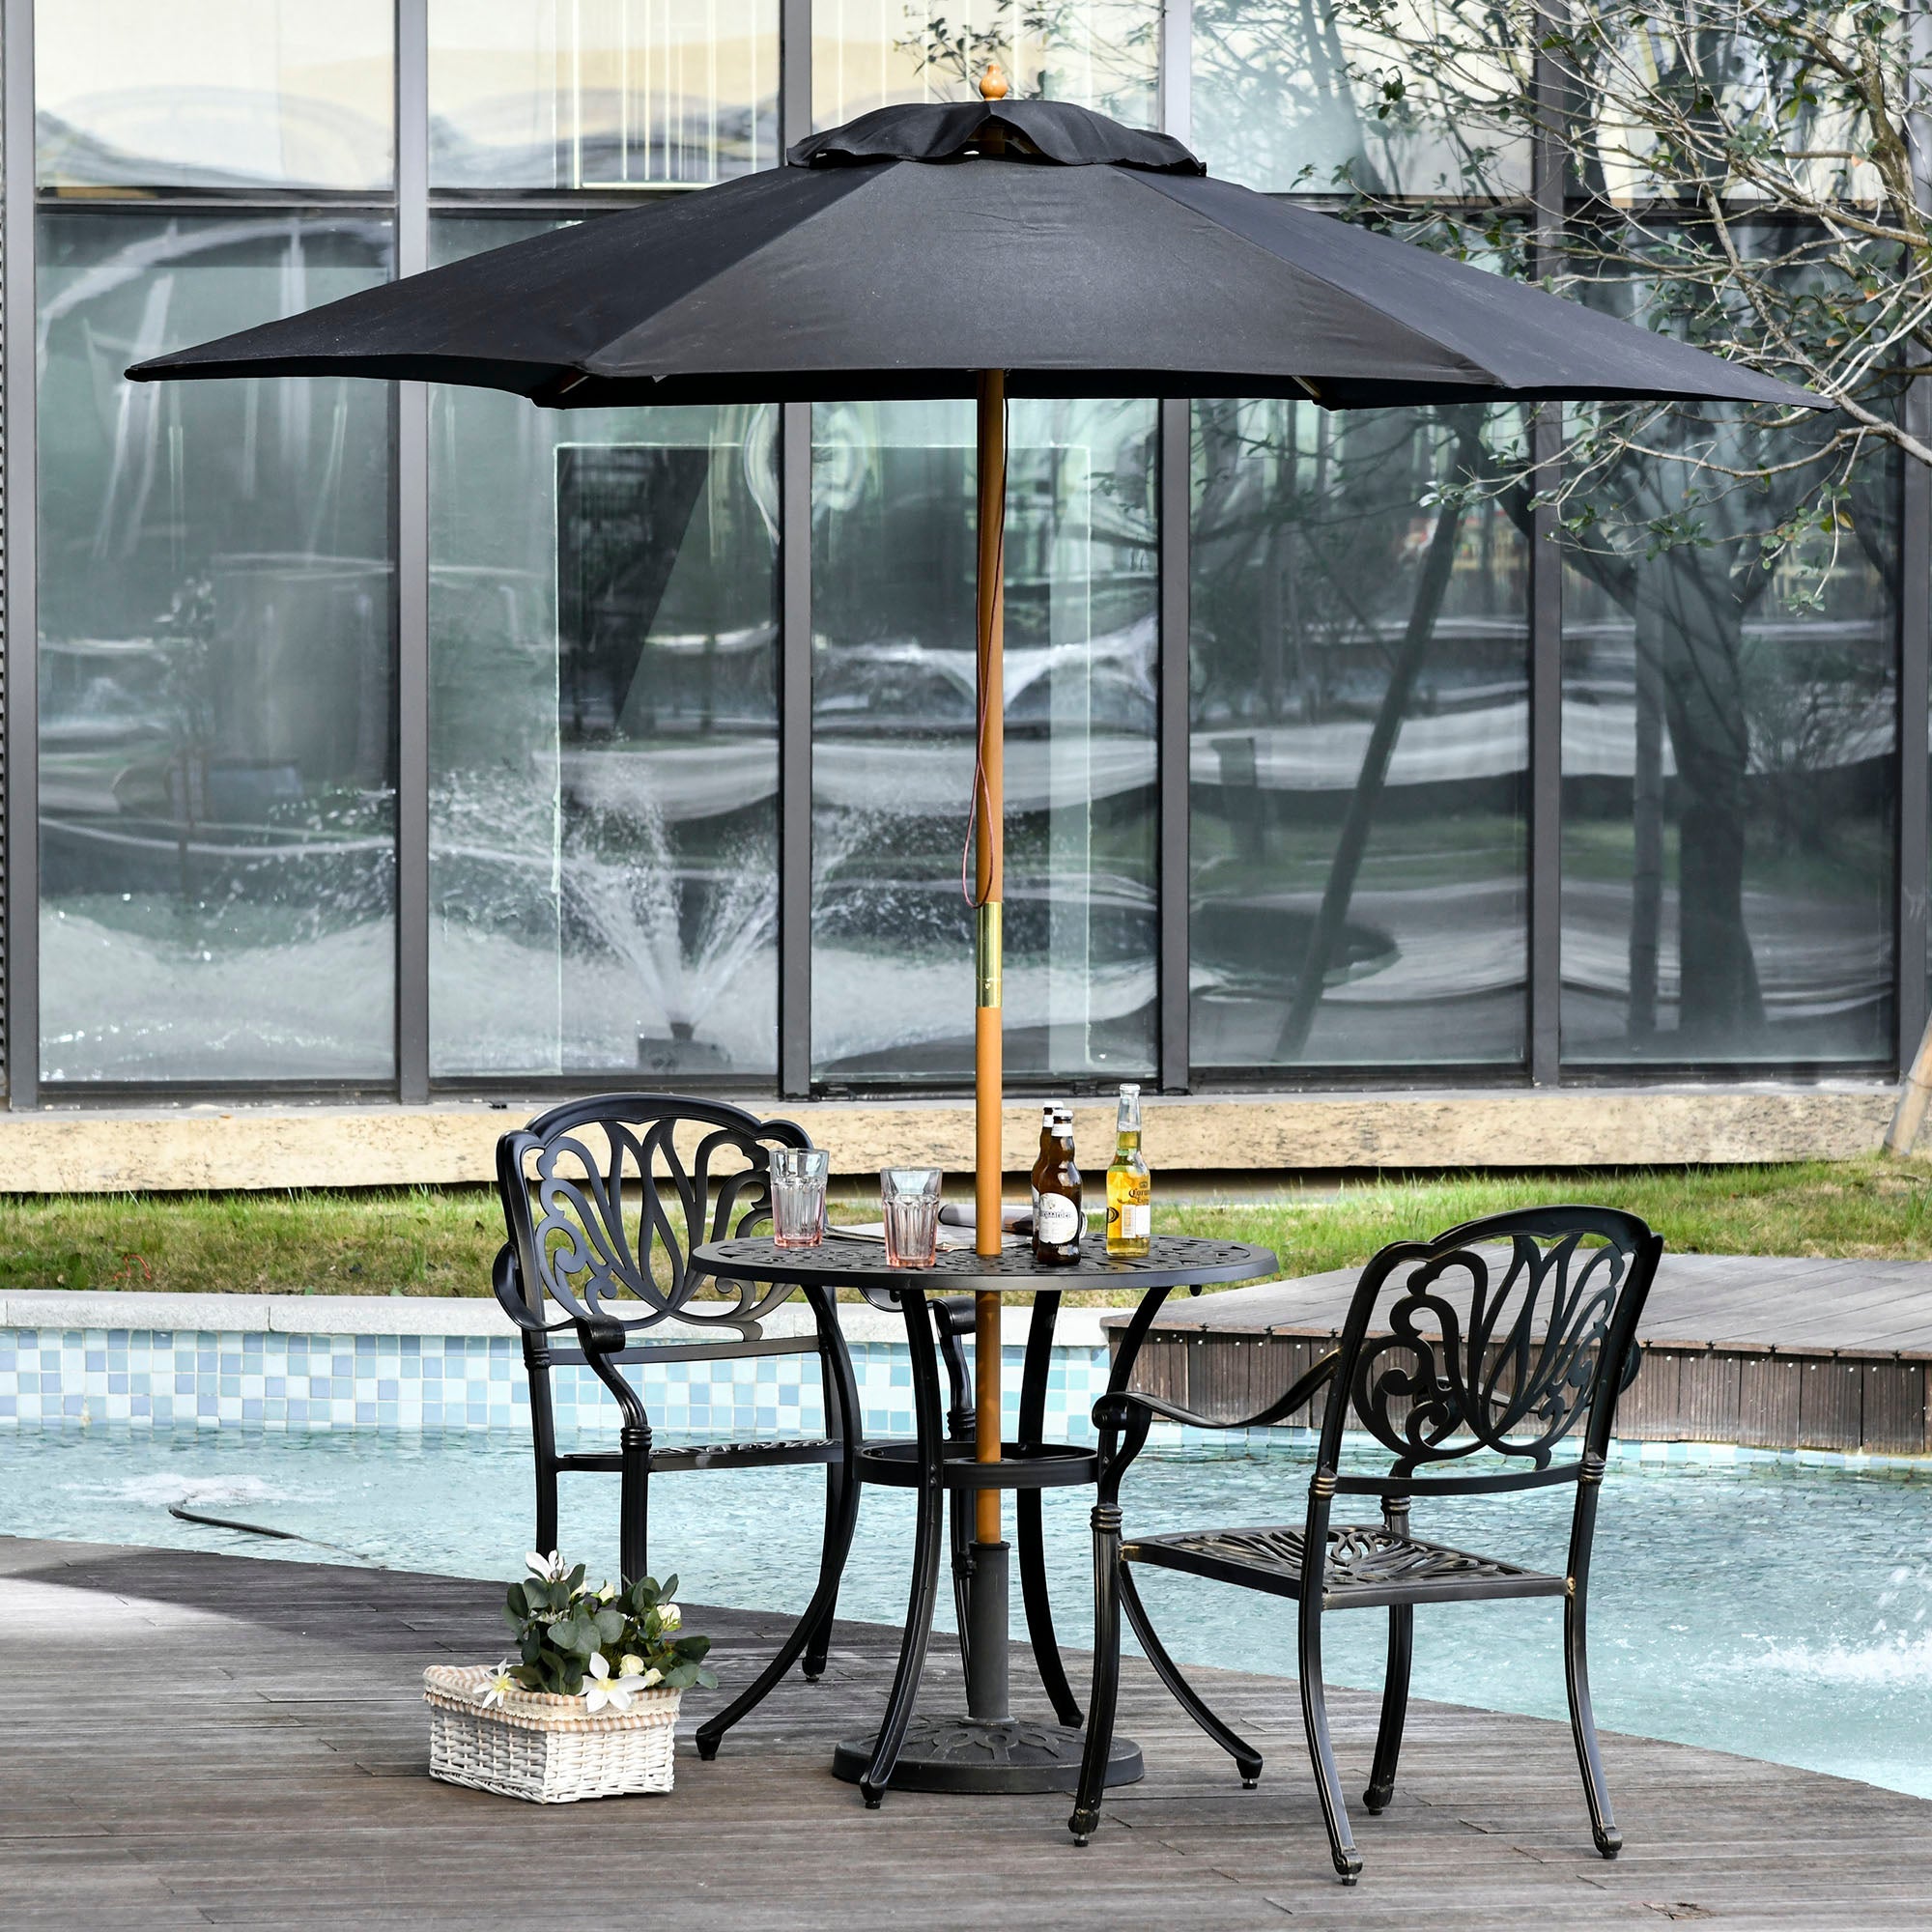 2.5m Wood Garden Parasol Sun Shade Patio Outdoor Wooden Umbrella Canopy Black-1